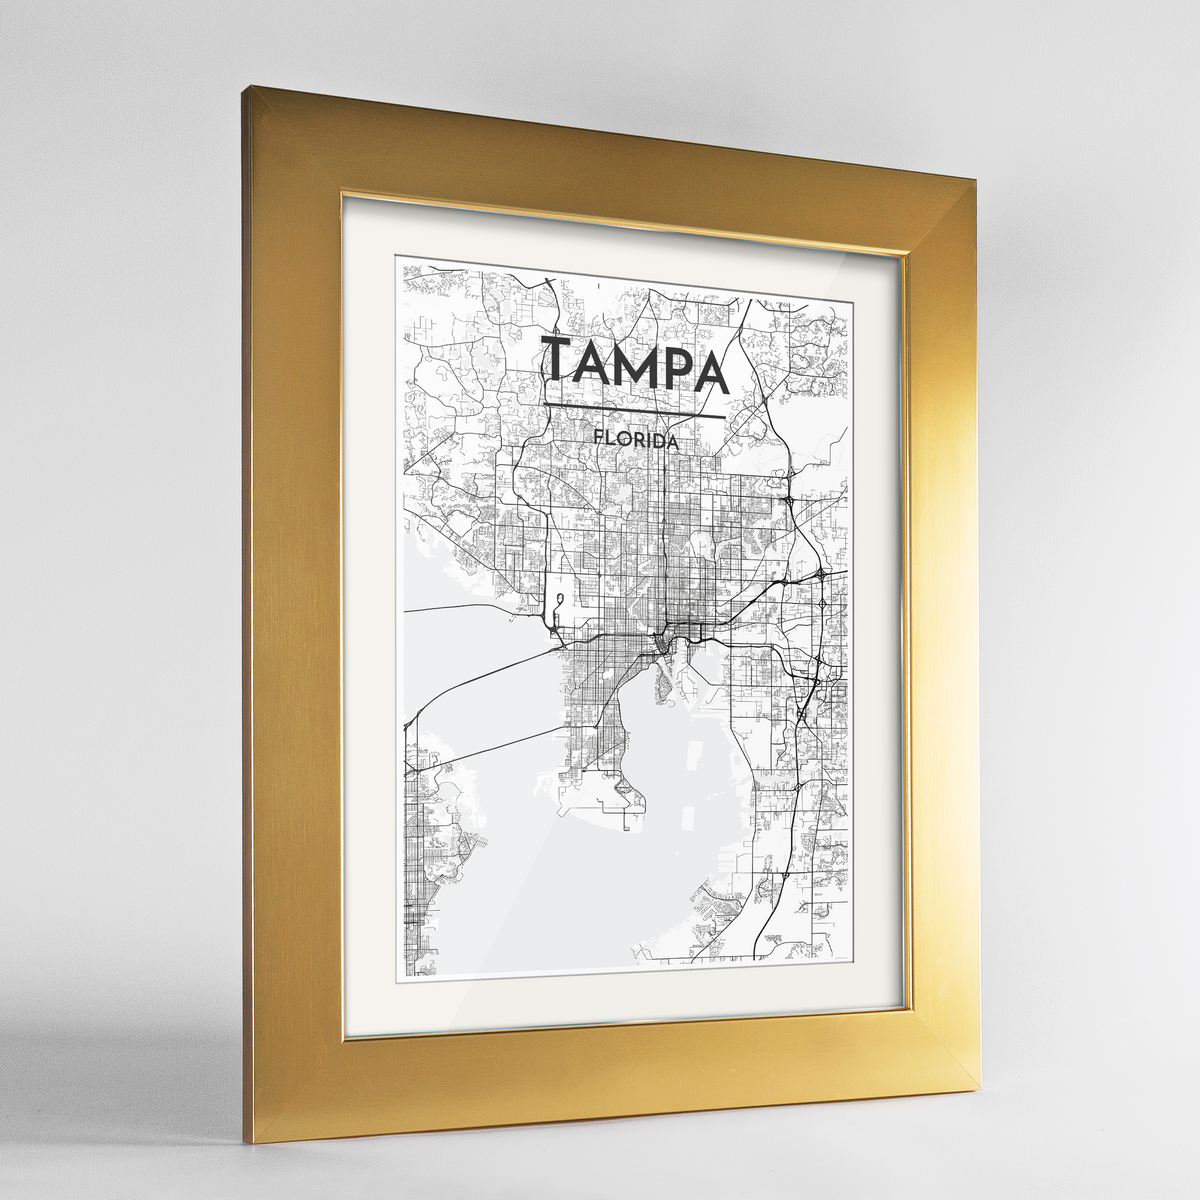 Tampa Map Art Print - Framed